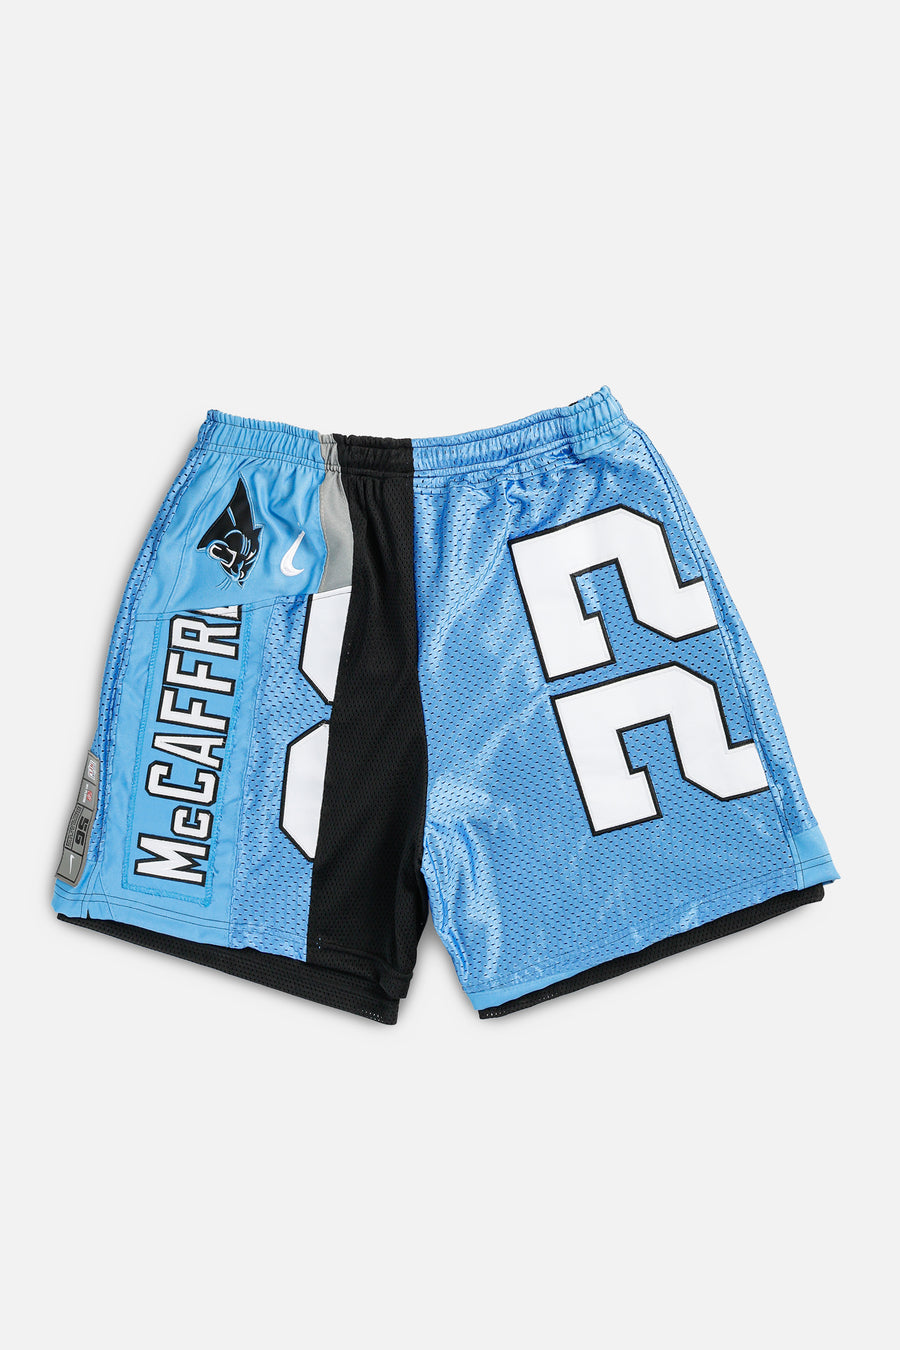 Unisex Rework Carolina Panthers NFL Jersey Shorts - XL